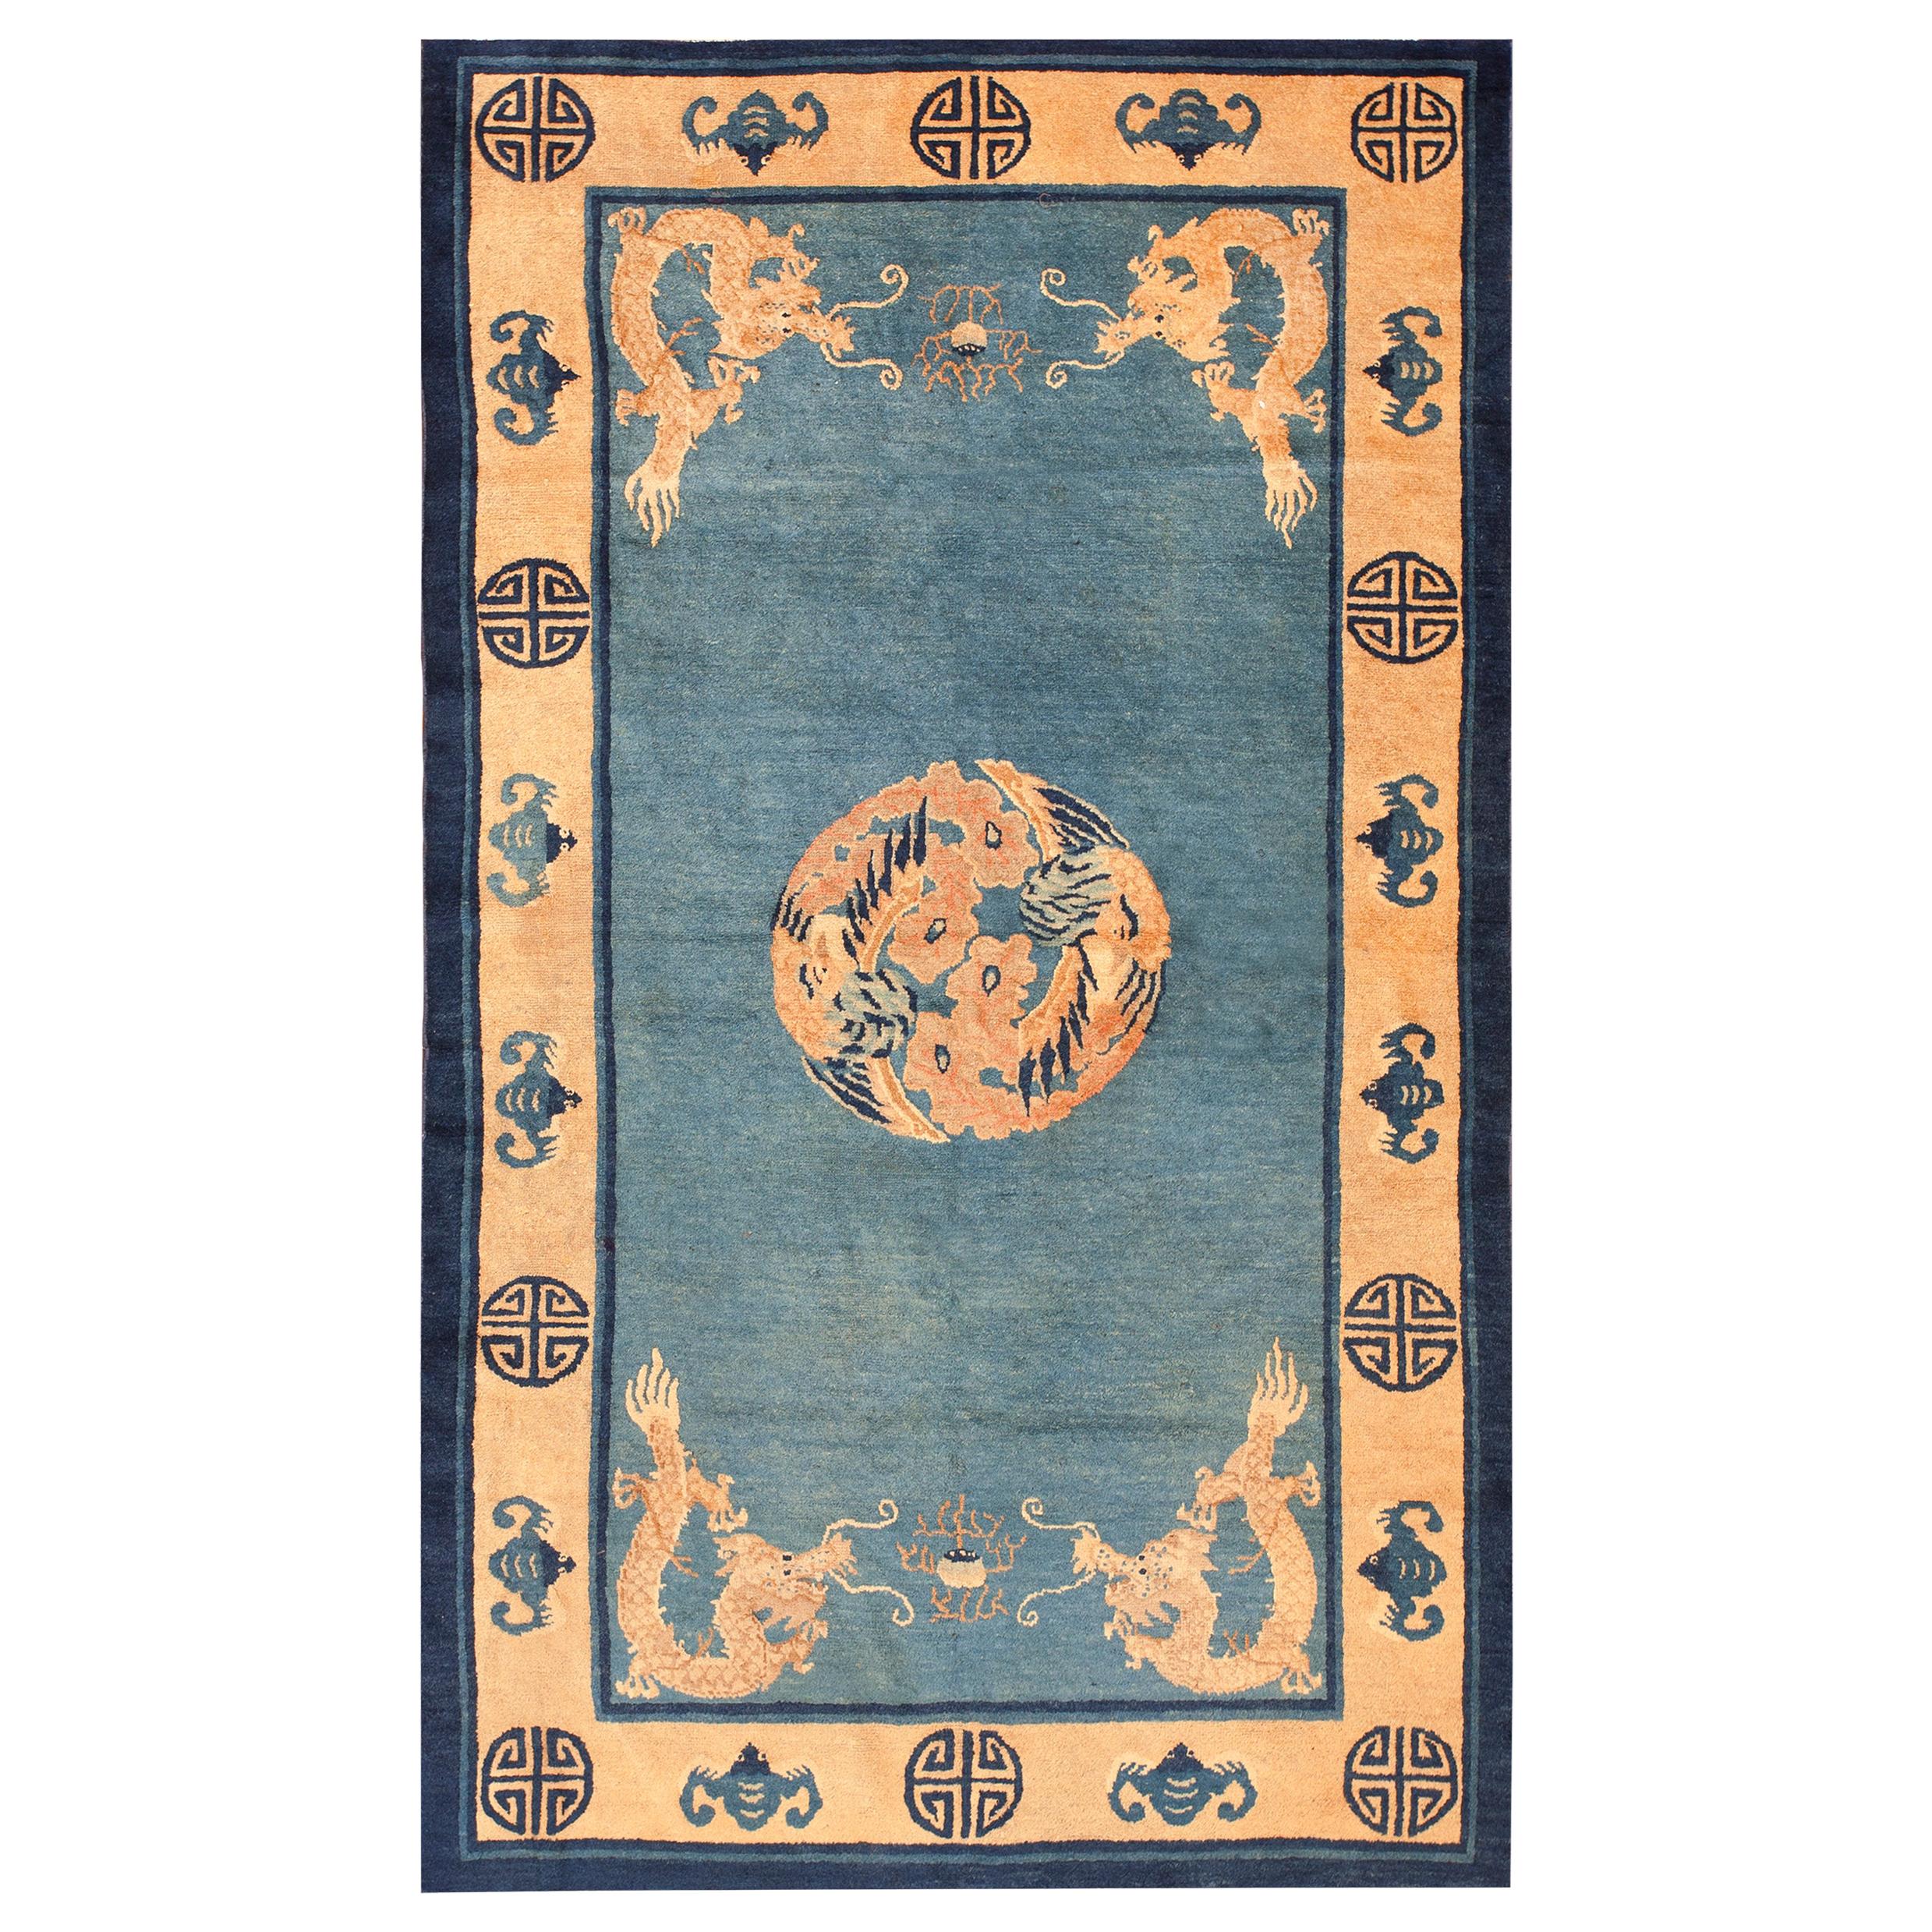 Late 19th Century Chinese Peking Dragon Carpet ( 4'2" x 7' - 127 x 213 )